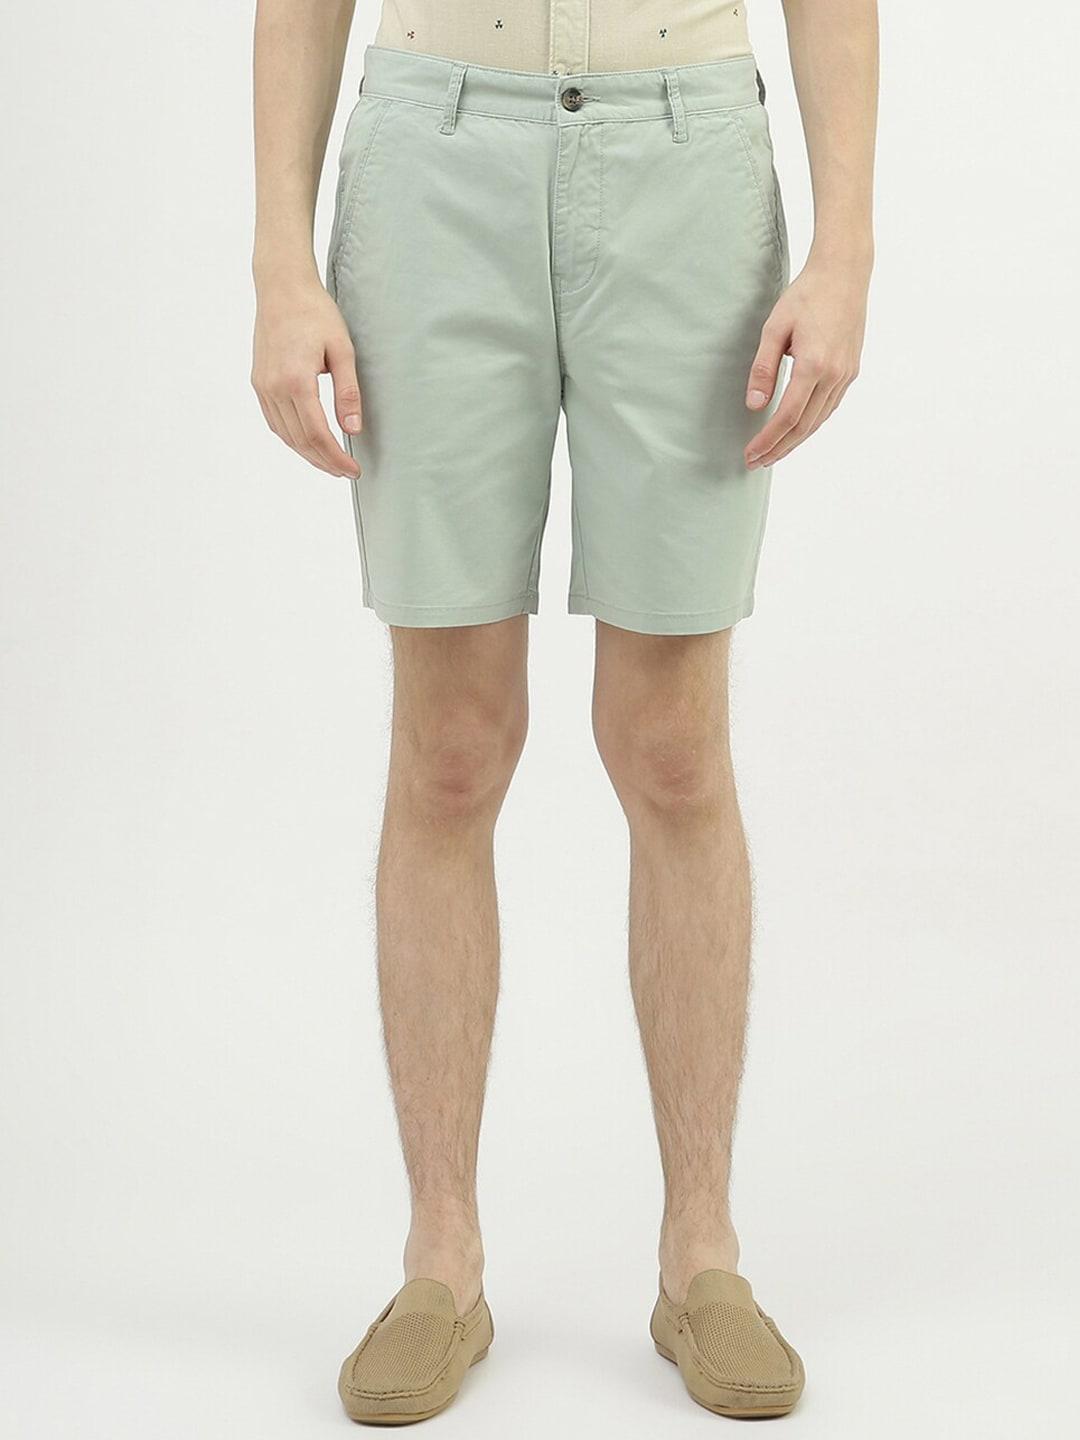 united-colors-of-benetton-men-slim-fit-shorts